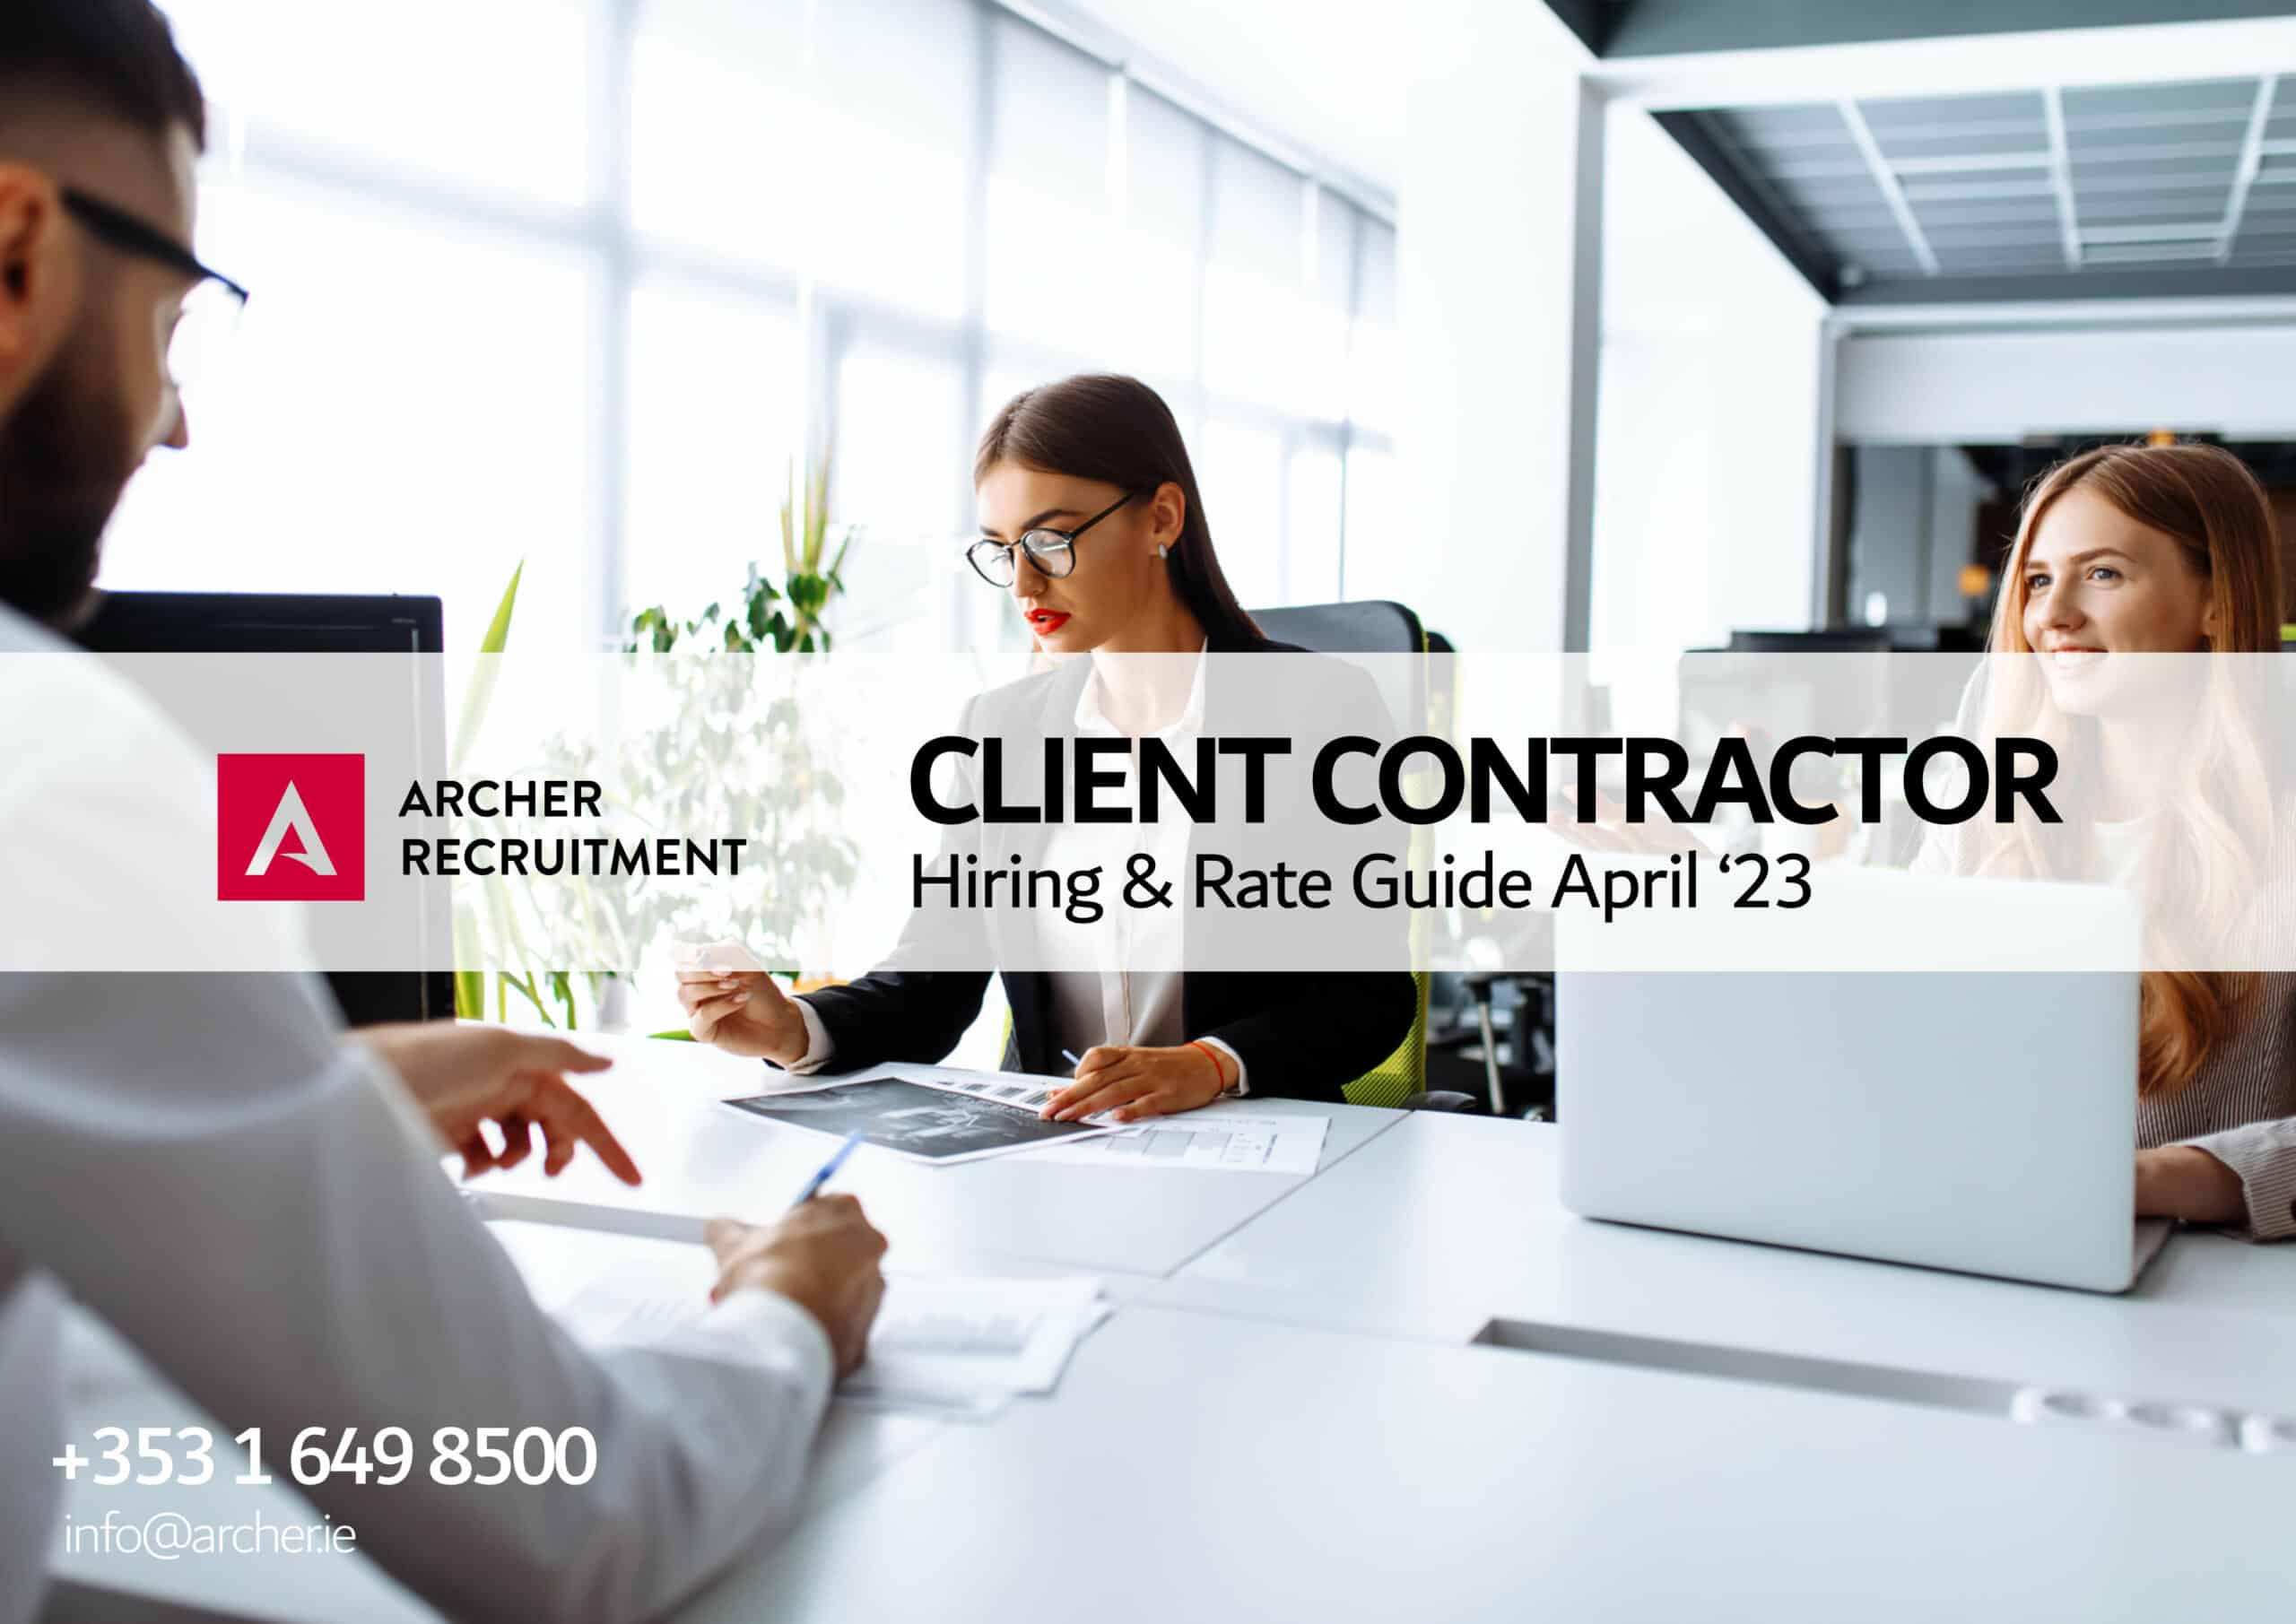 Archer Recruitment Client Contractor Hiring Guide 2023